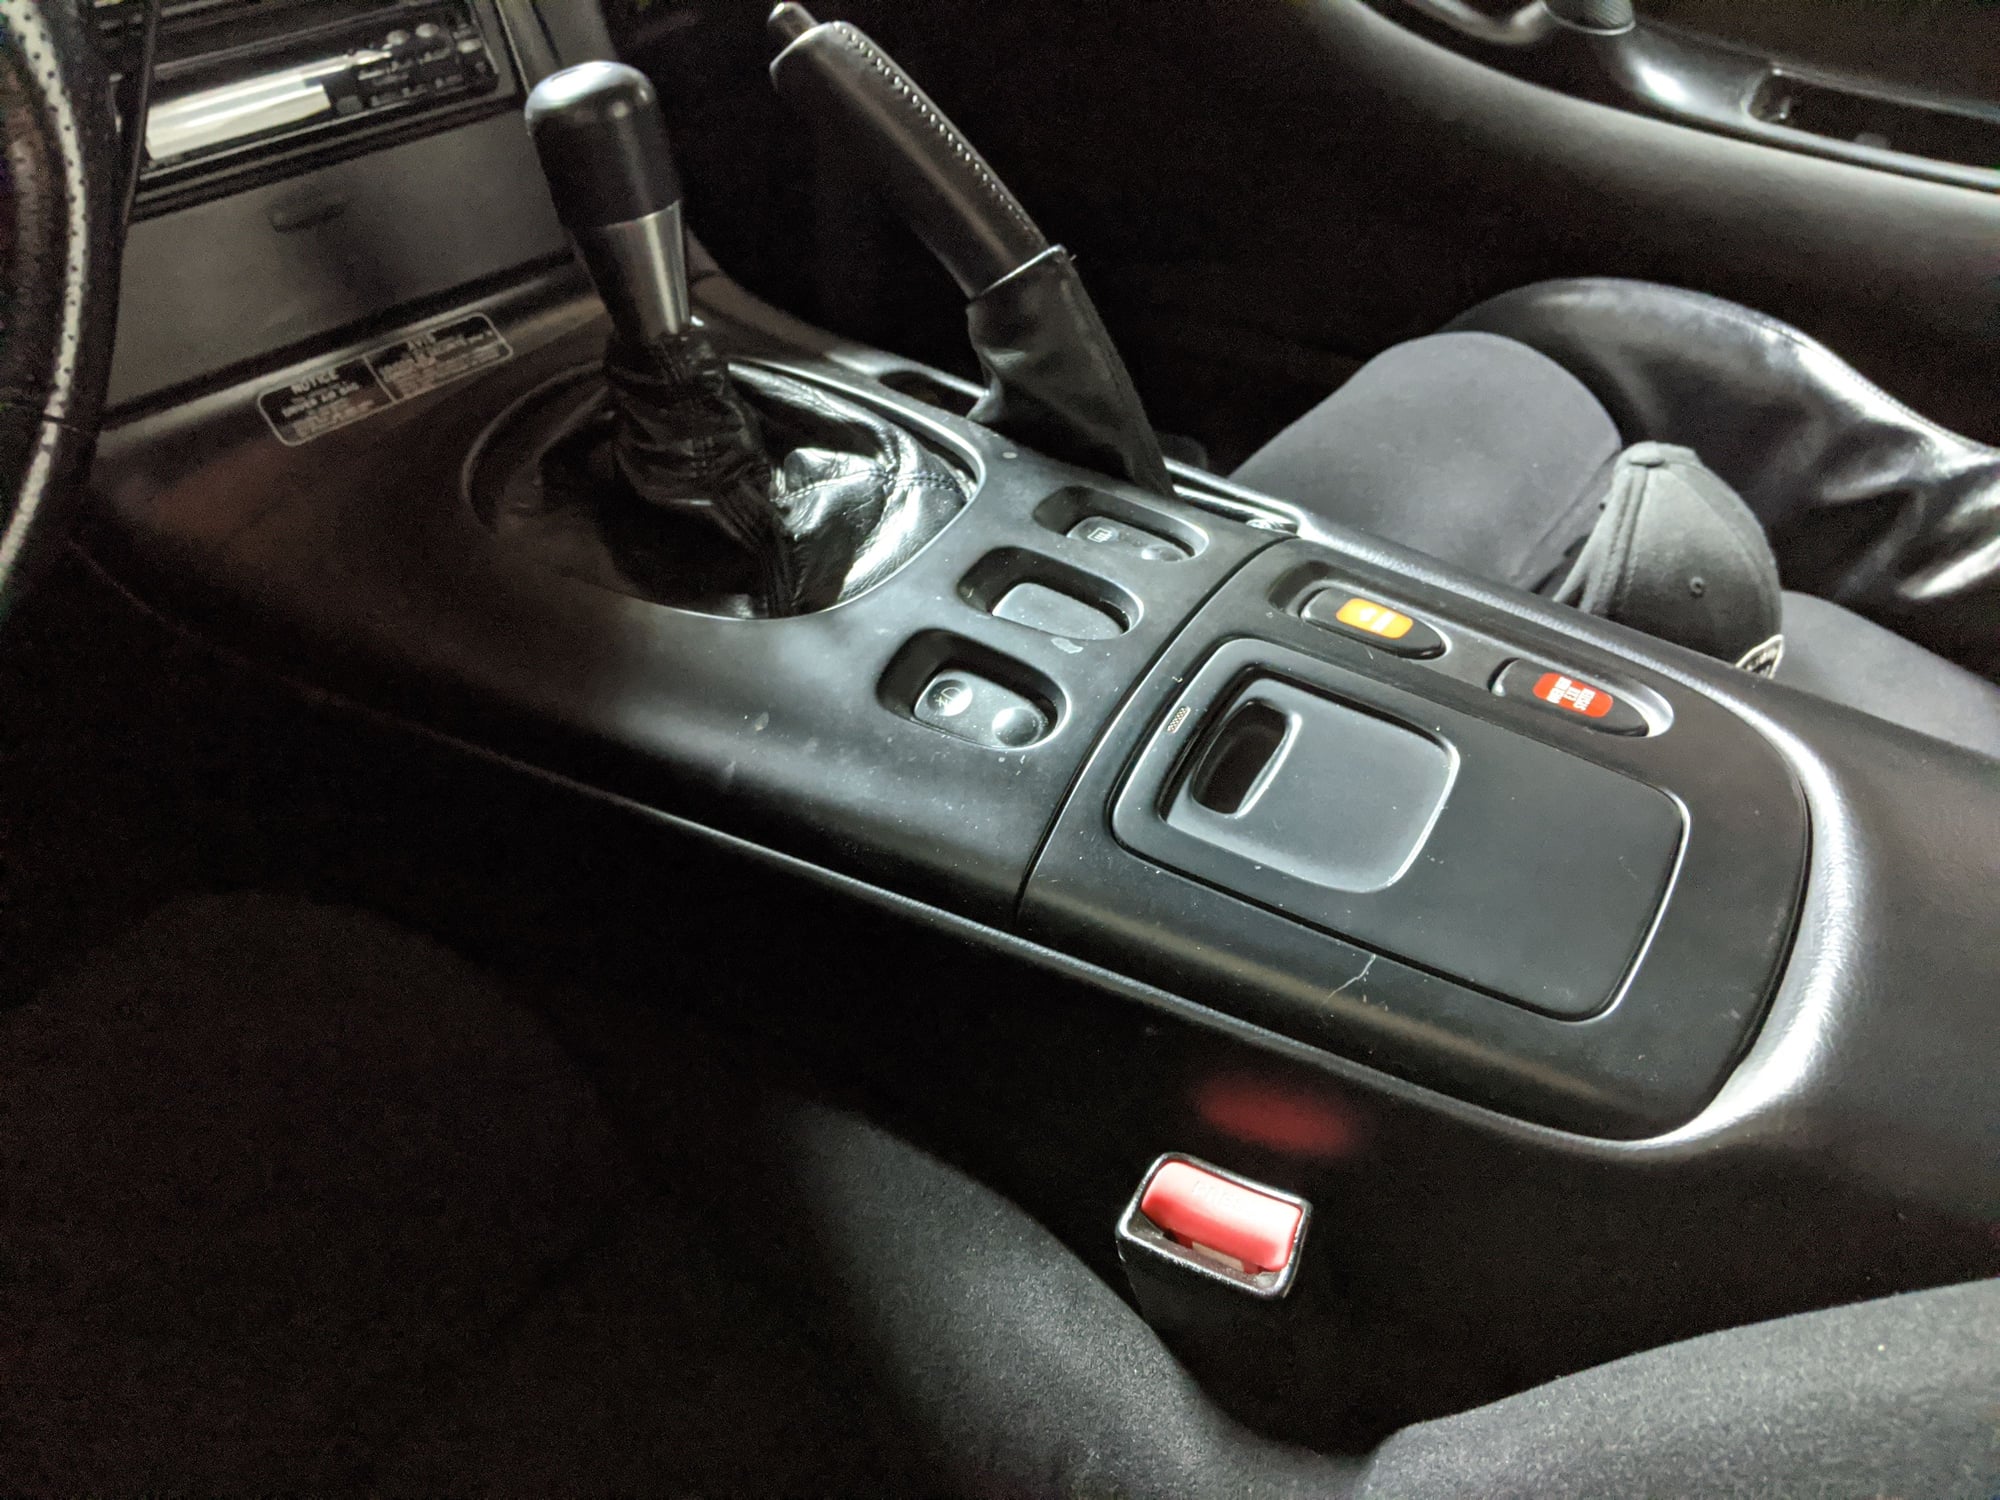 Interior/Upholstery - WTB Shifter Panel 93 Finish - Used - 1993 to 1995 Mazda RX-7 - San Francisco, CA 94014, United States